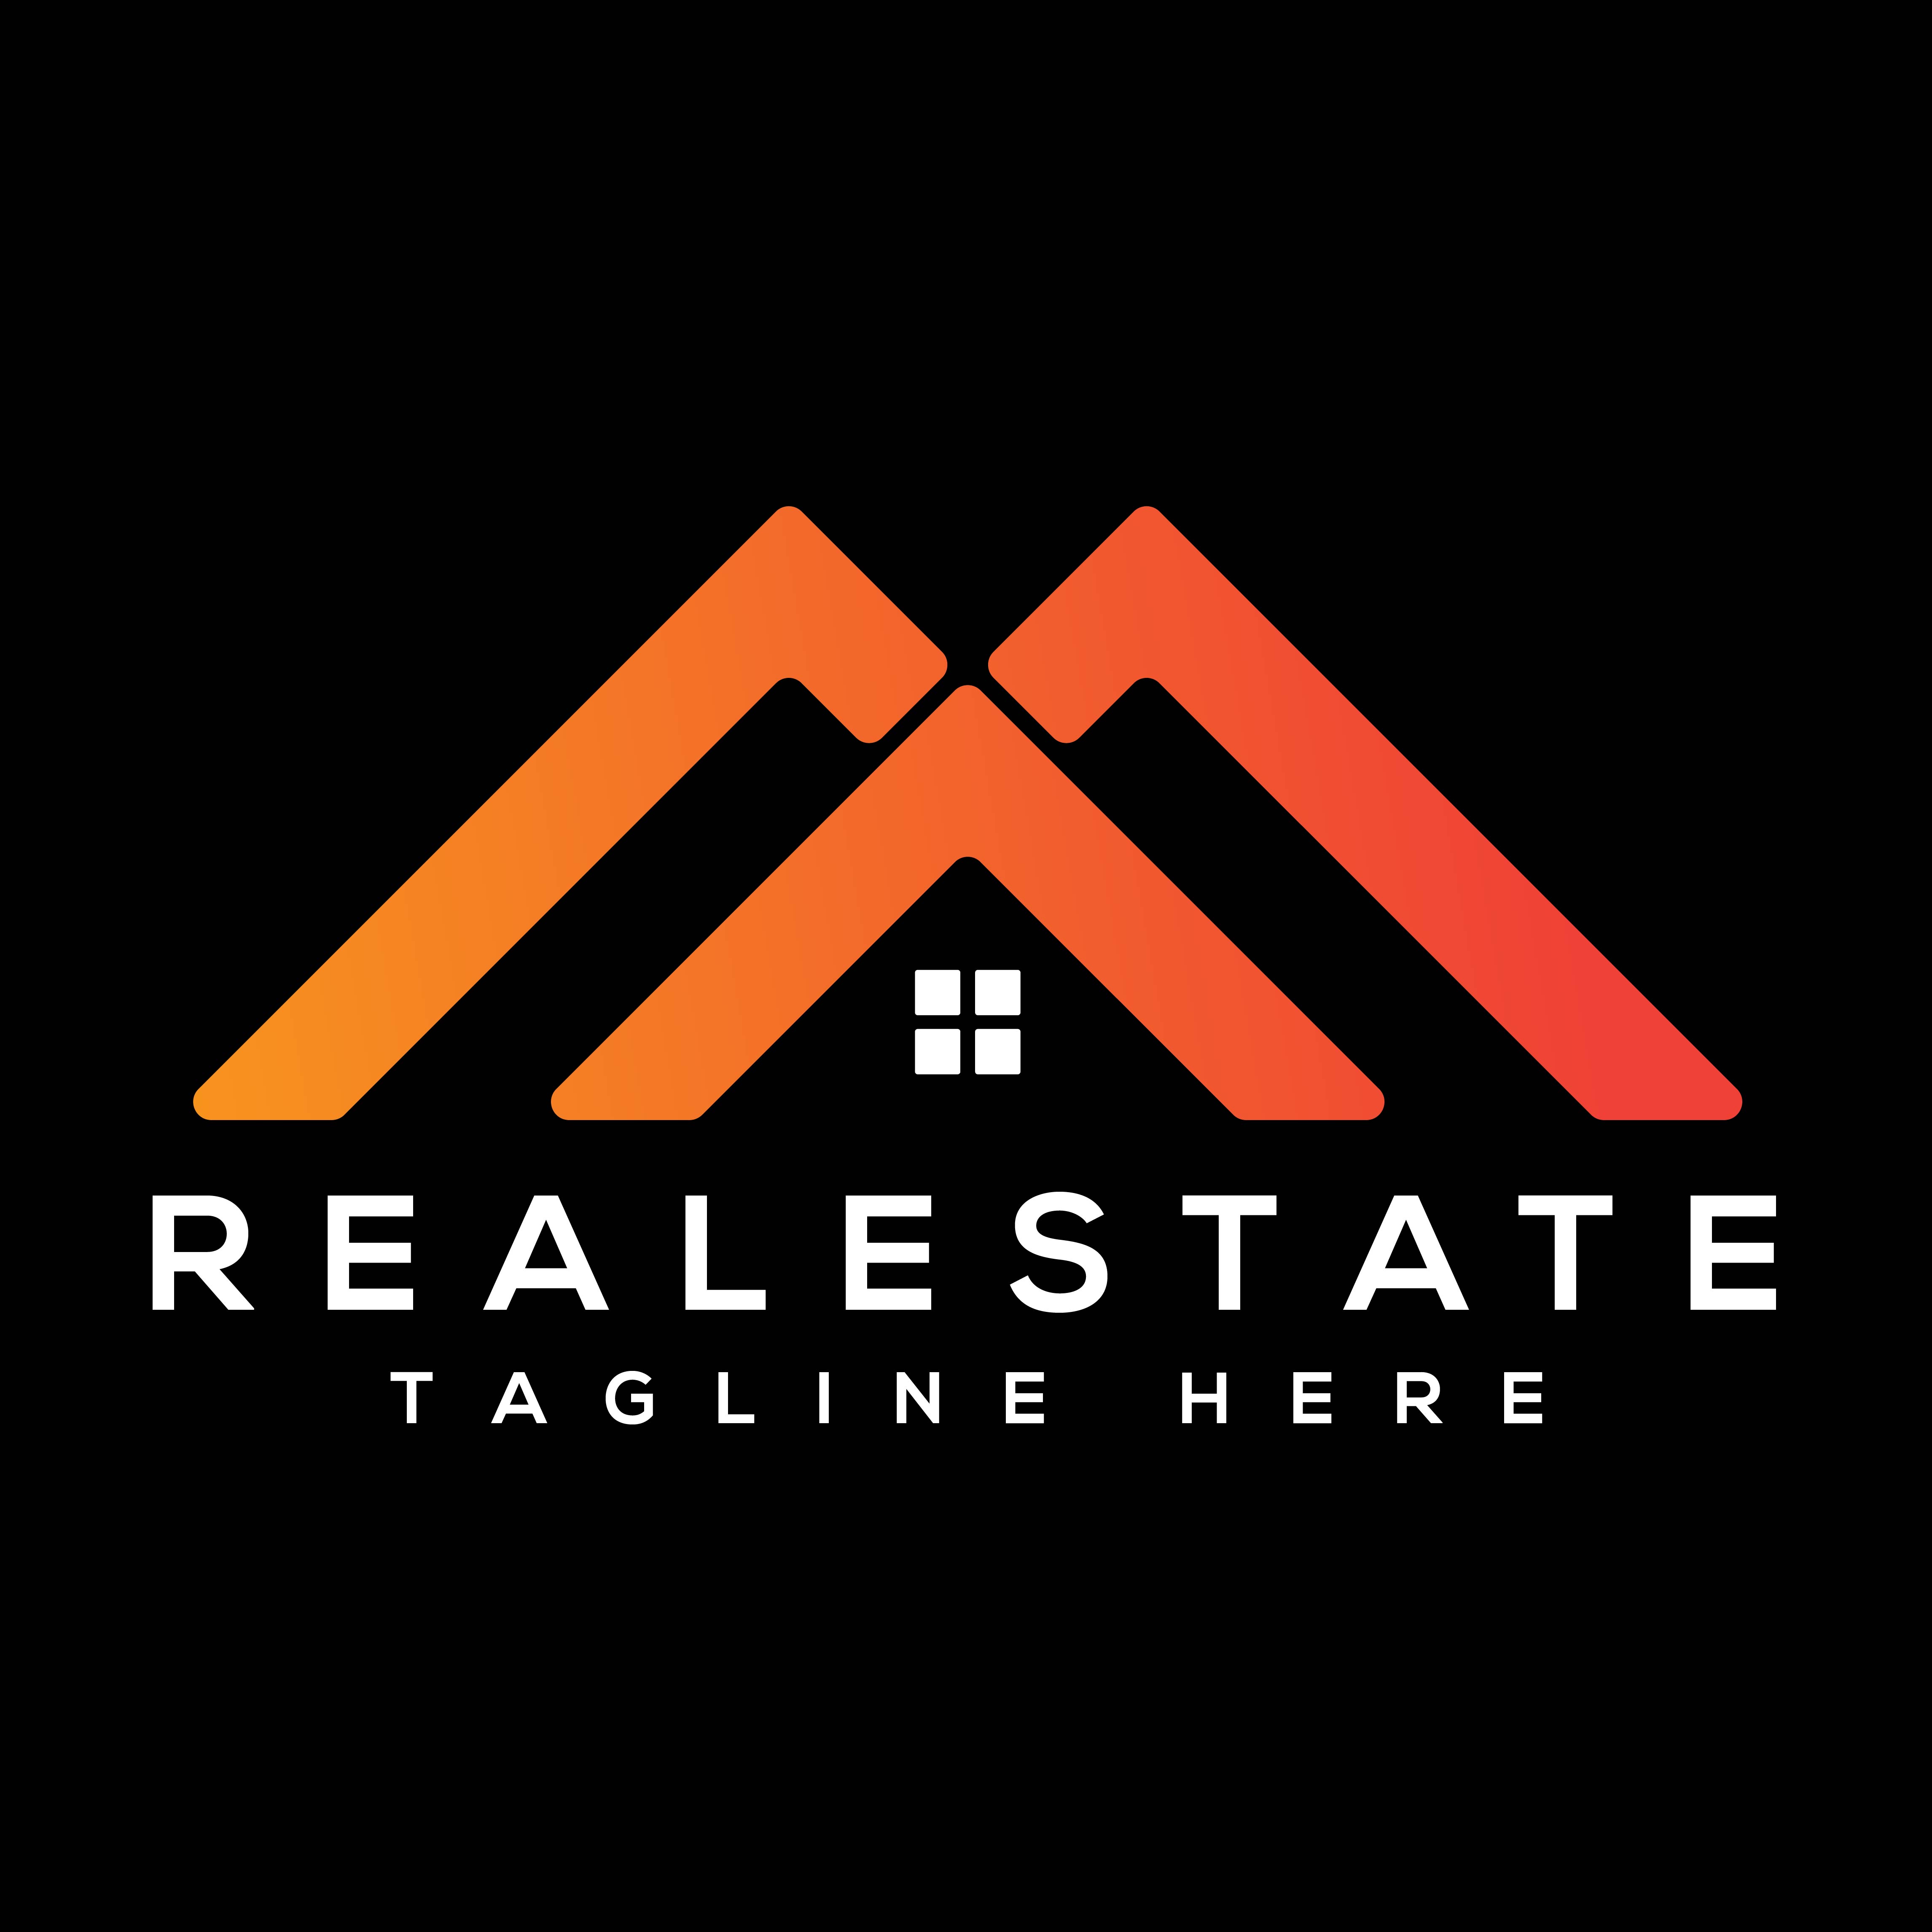 Real Estate Logo Design main cover.